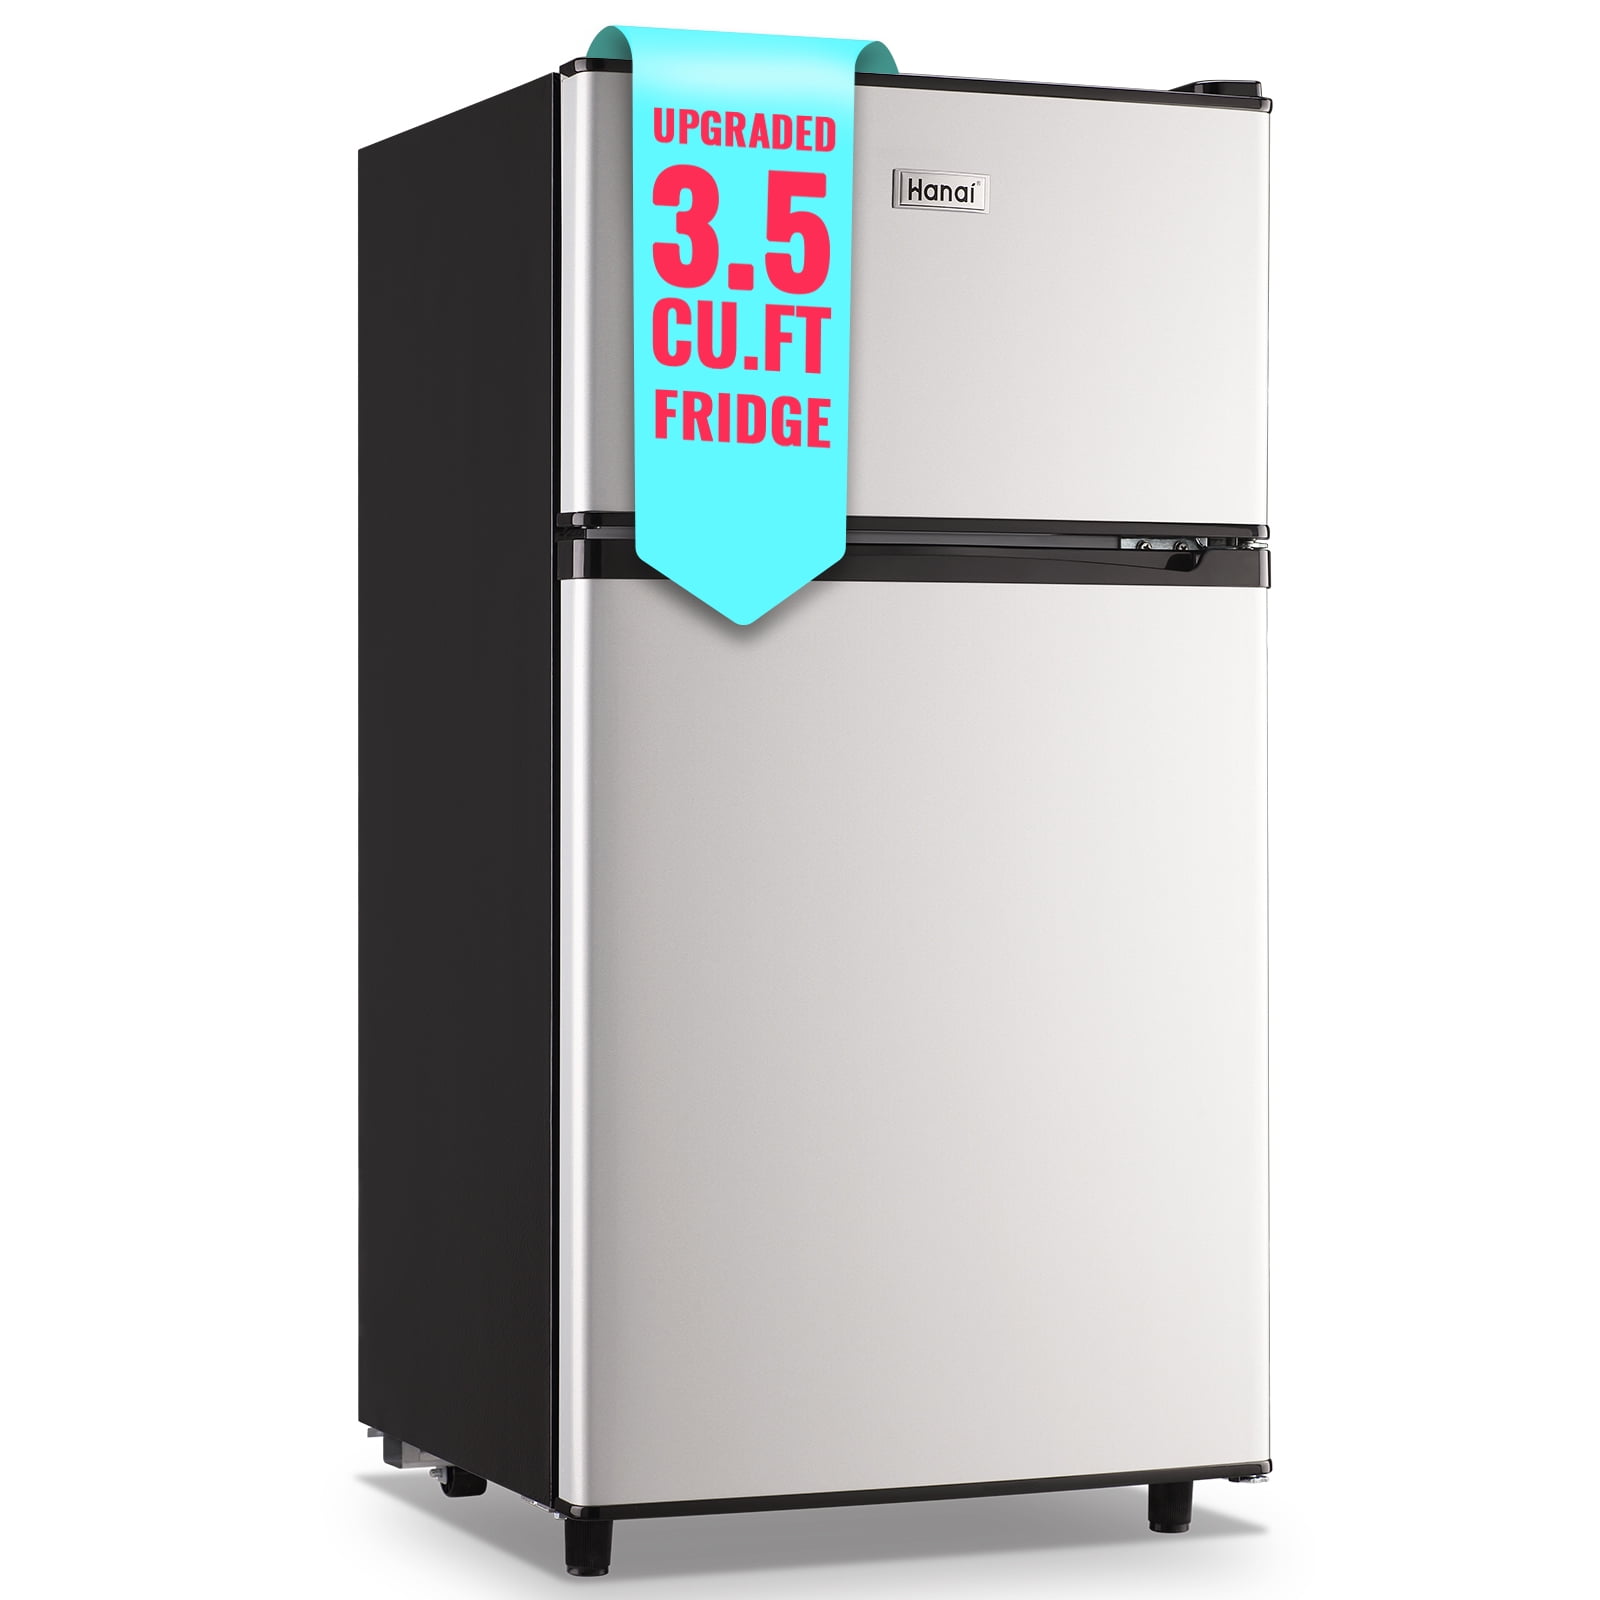 RMRT30X1BIS by Avanti - Avanti Retro Series Compact Refrigerator and Freezer,  3.0 cu. ft.